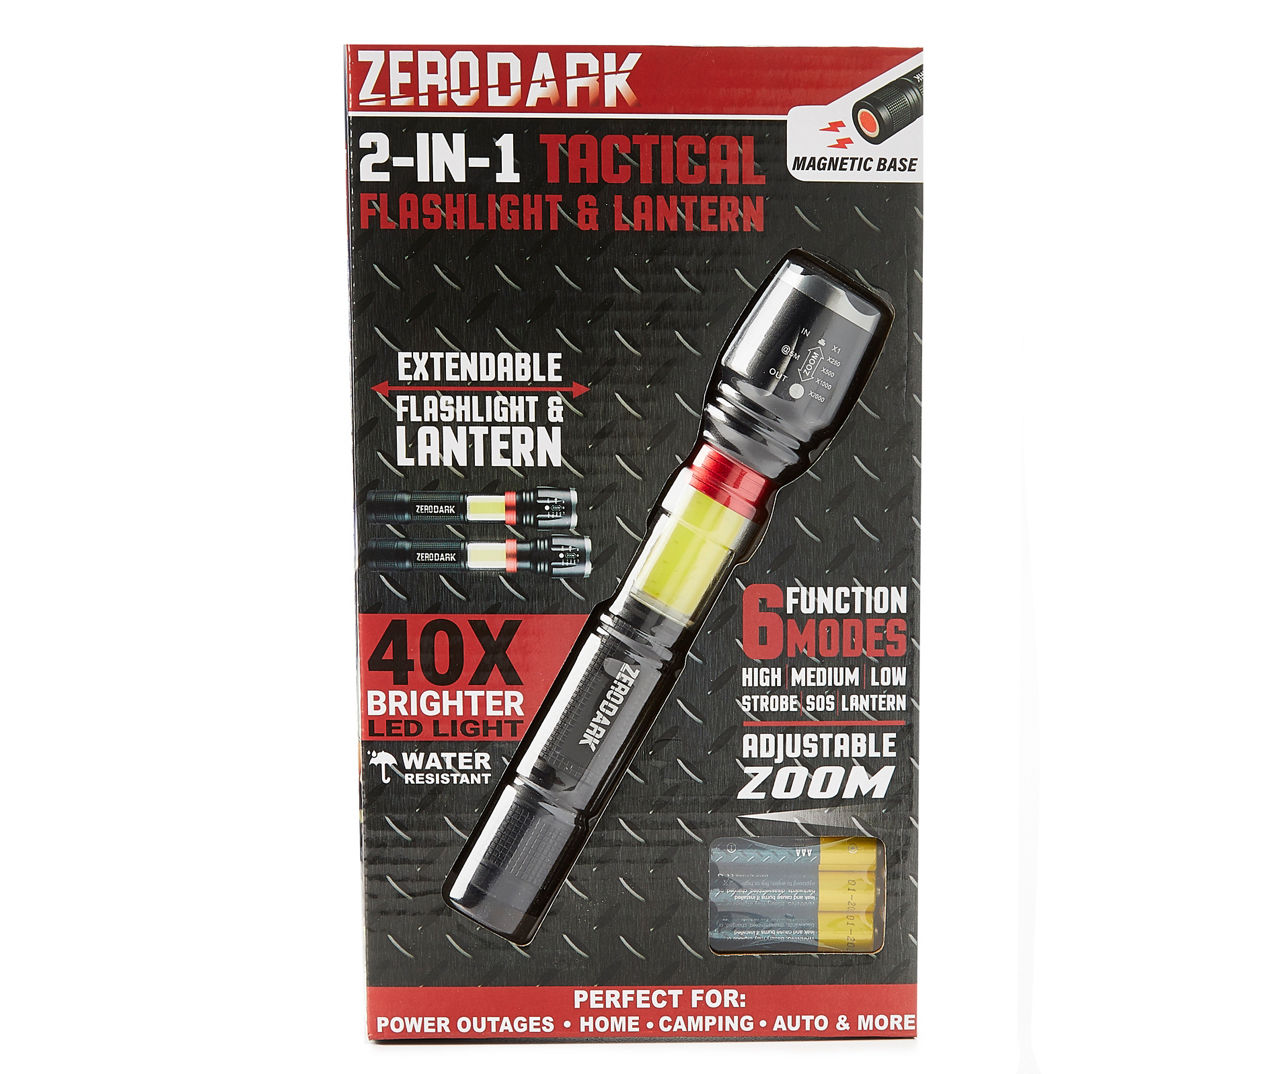 ZeroDark Headlamp + Lantern 2-Piece Flashlight Set, Head